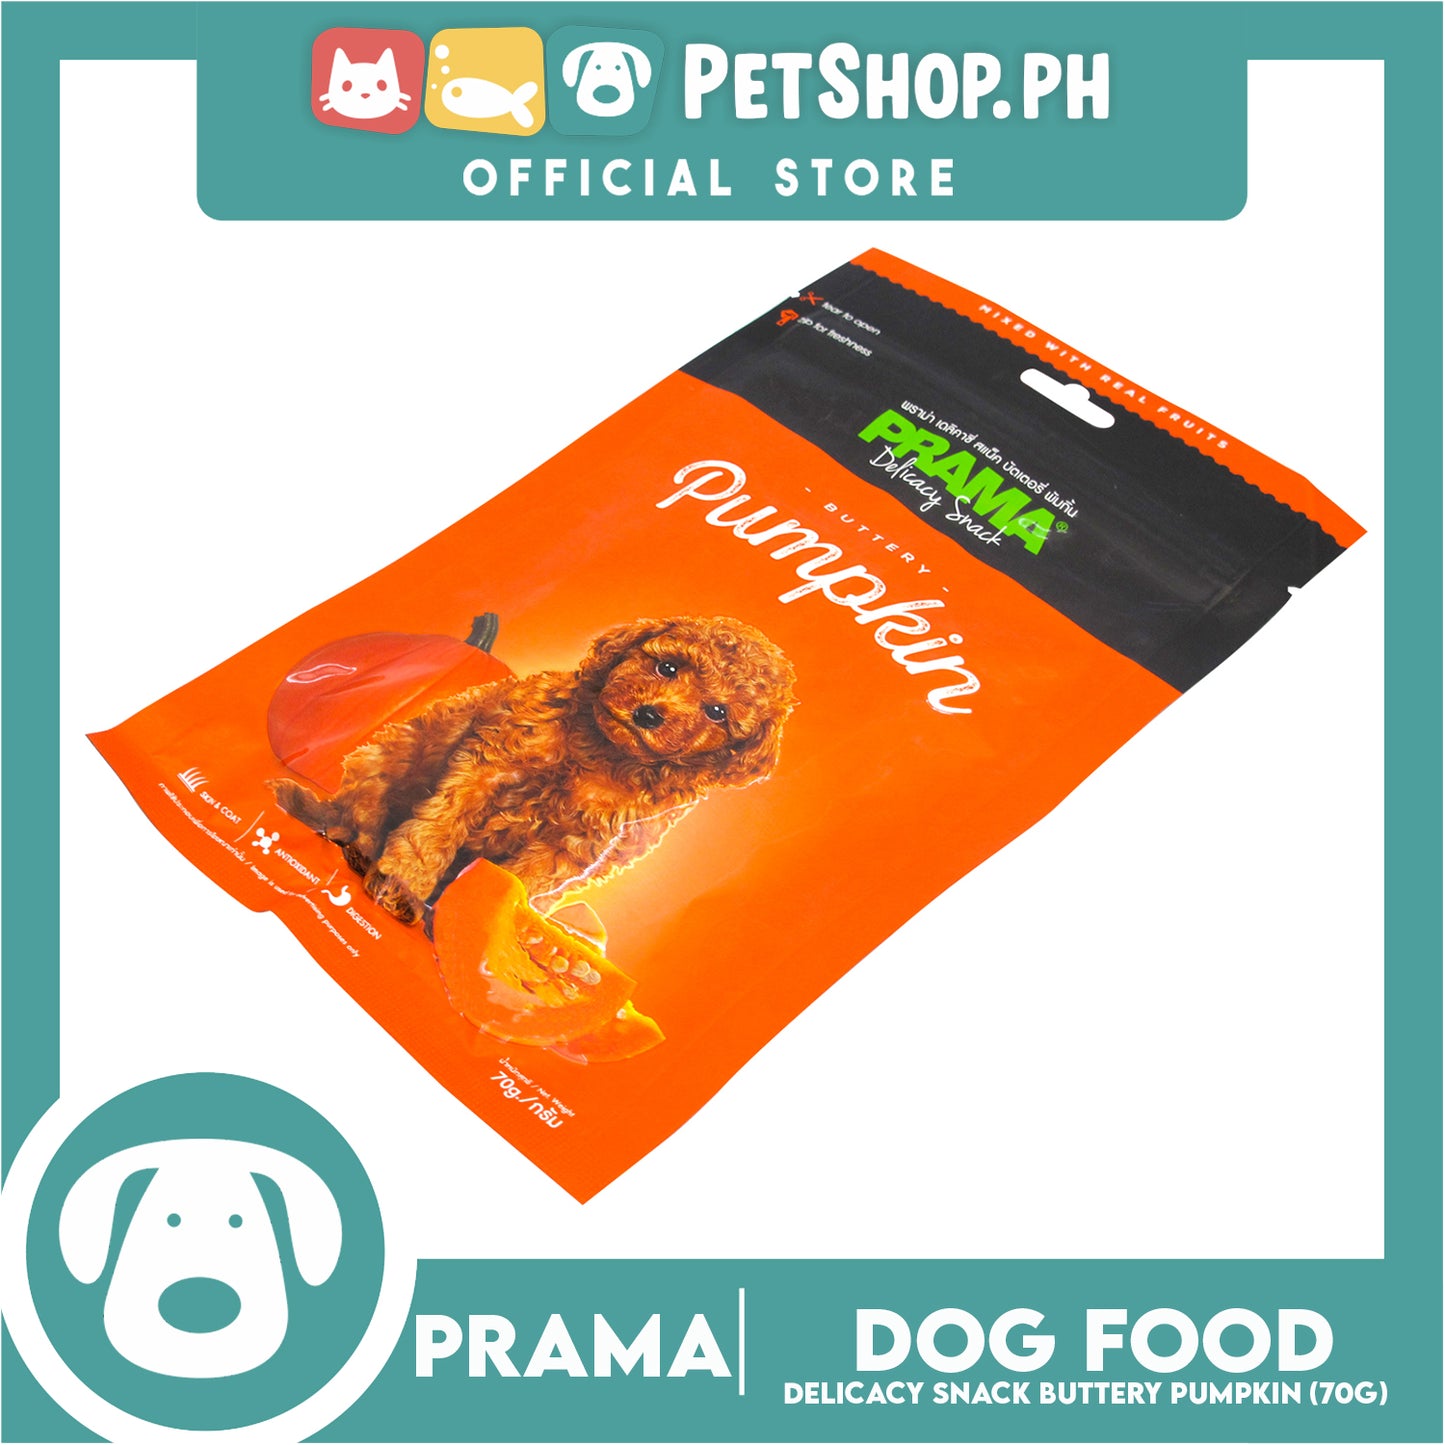 Prama Delicacy Snack Buttery Pumpkin 70g Dog Treats